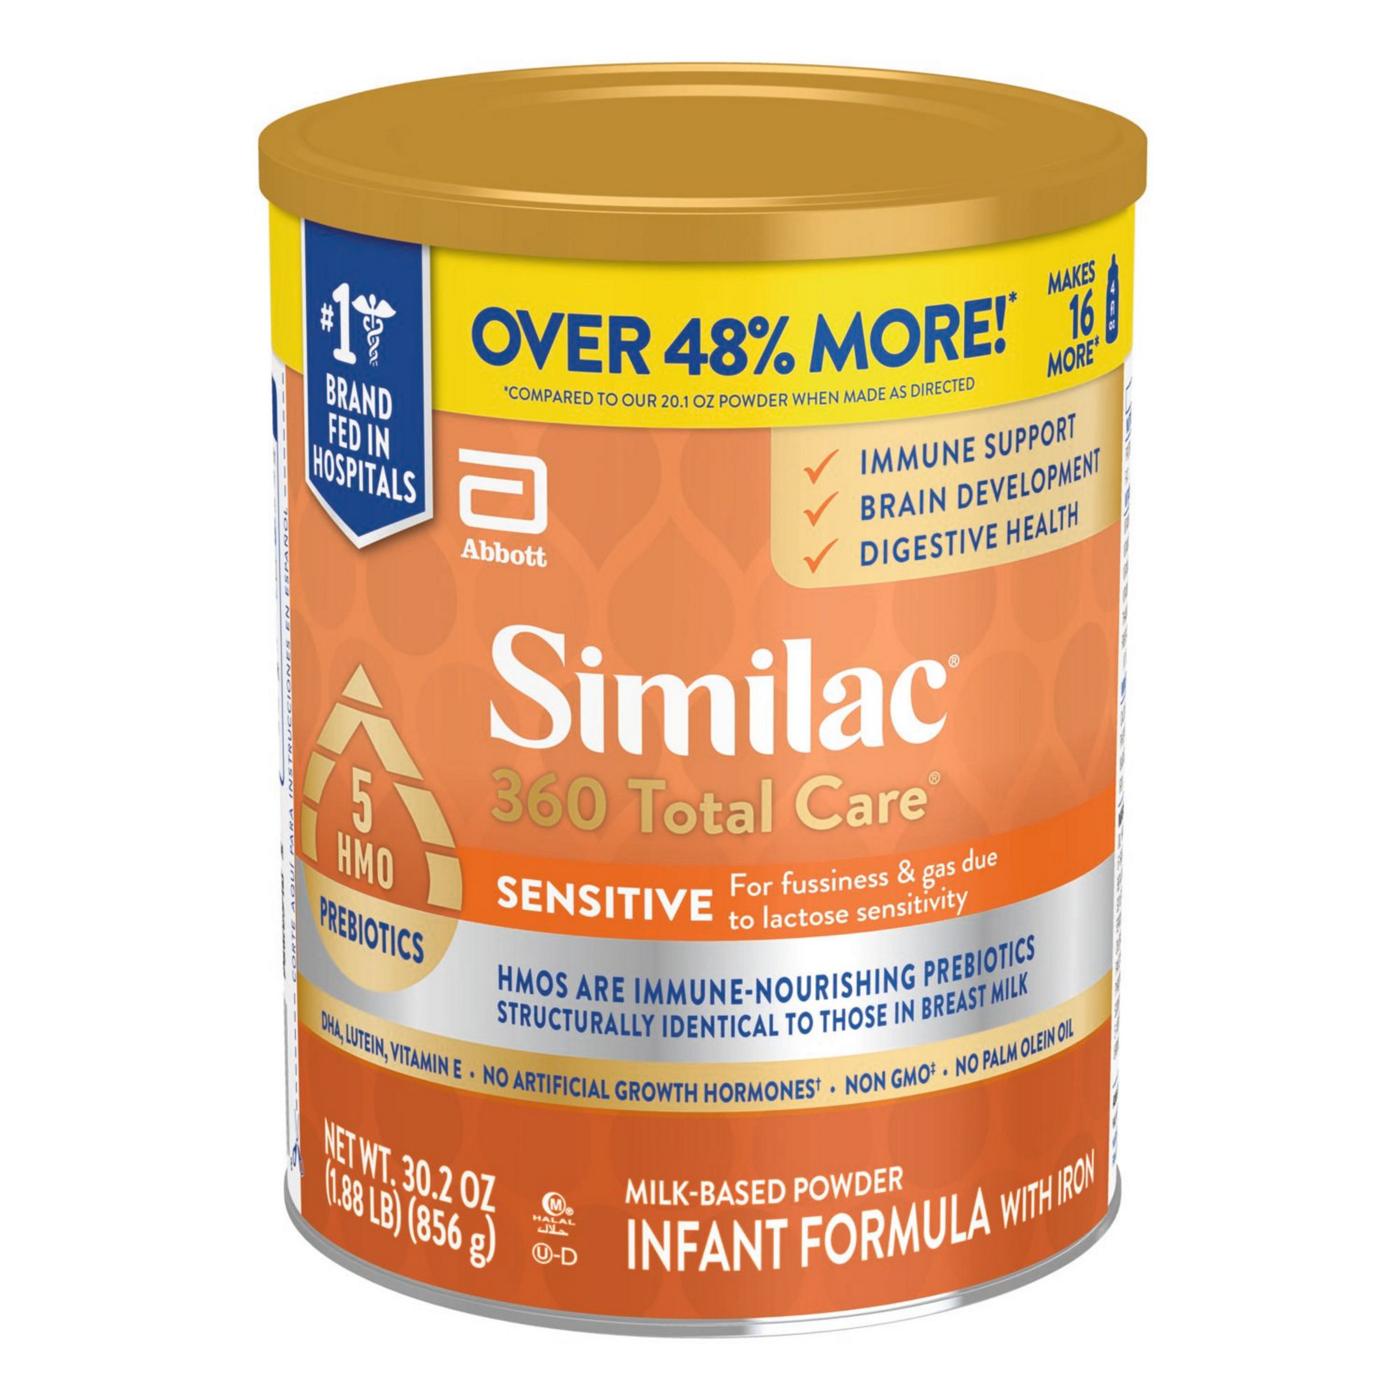 Similac 360 Total Care Sensitive Infant Formula Powder with 5 HMO Prebiotics - Value Can; image 5 of 15